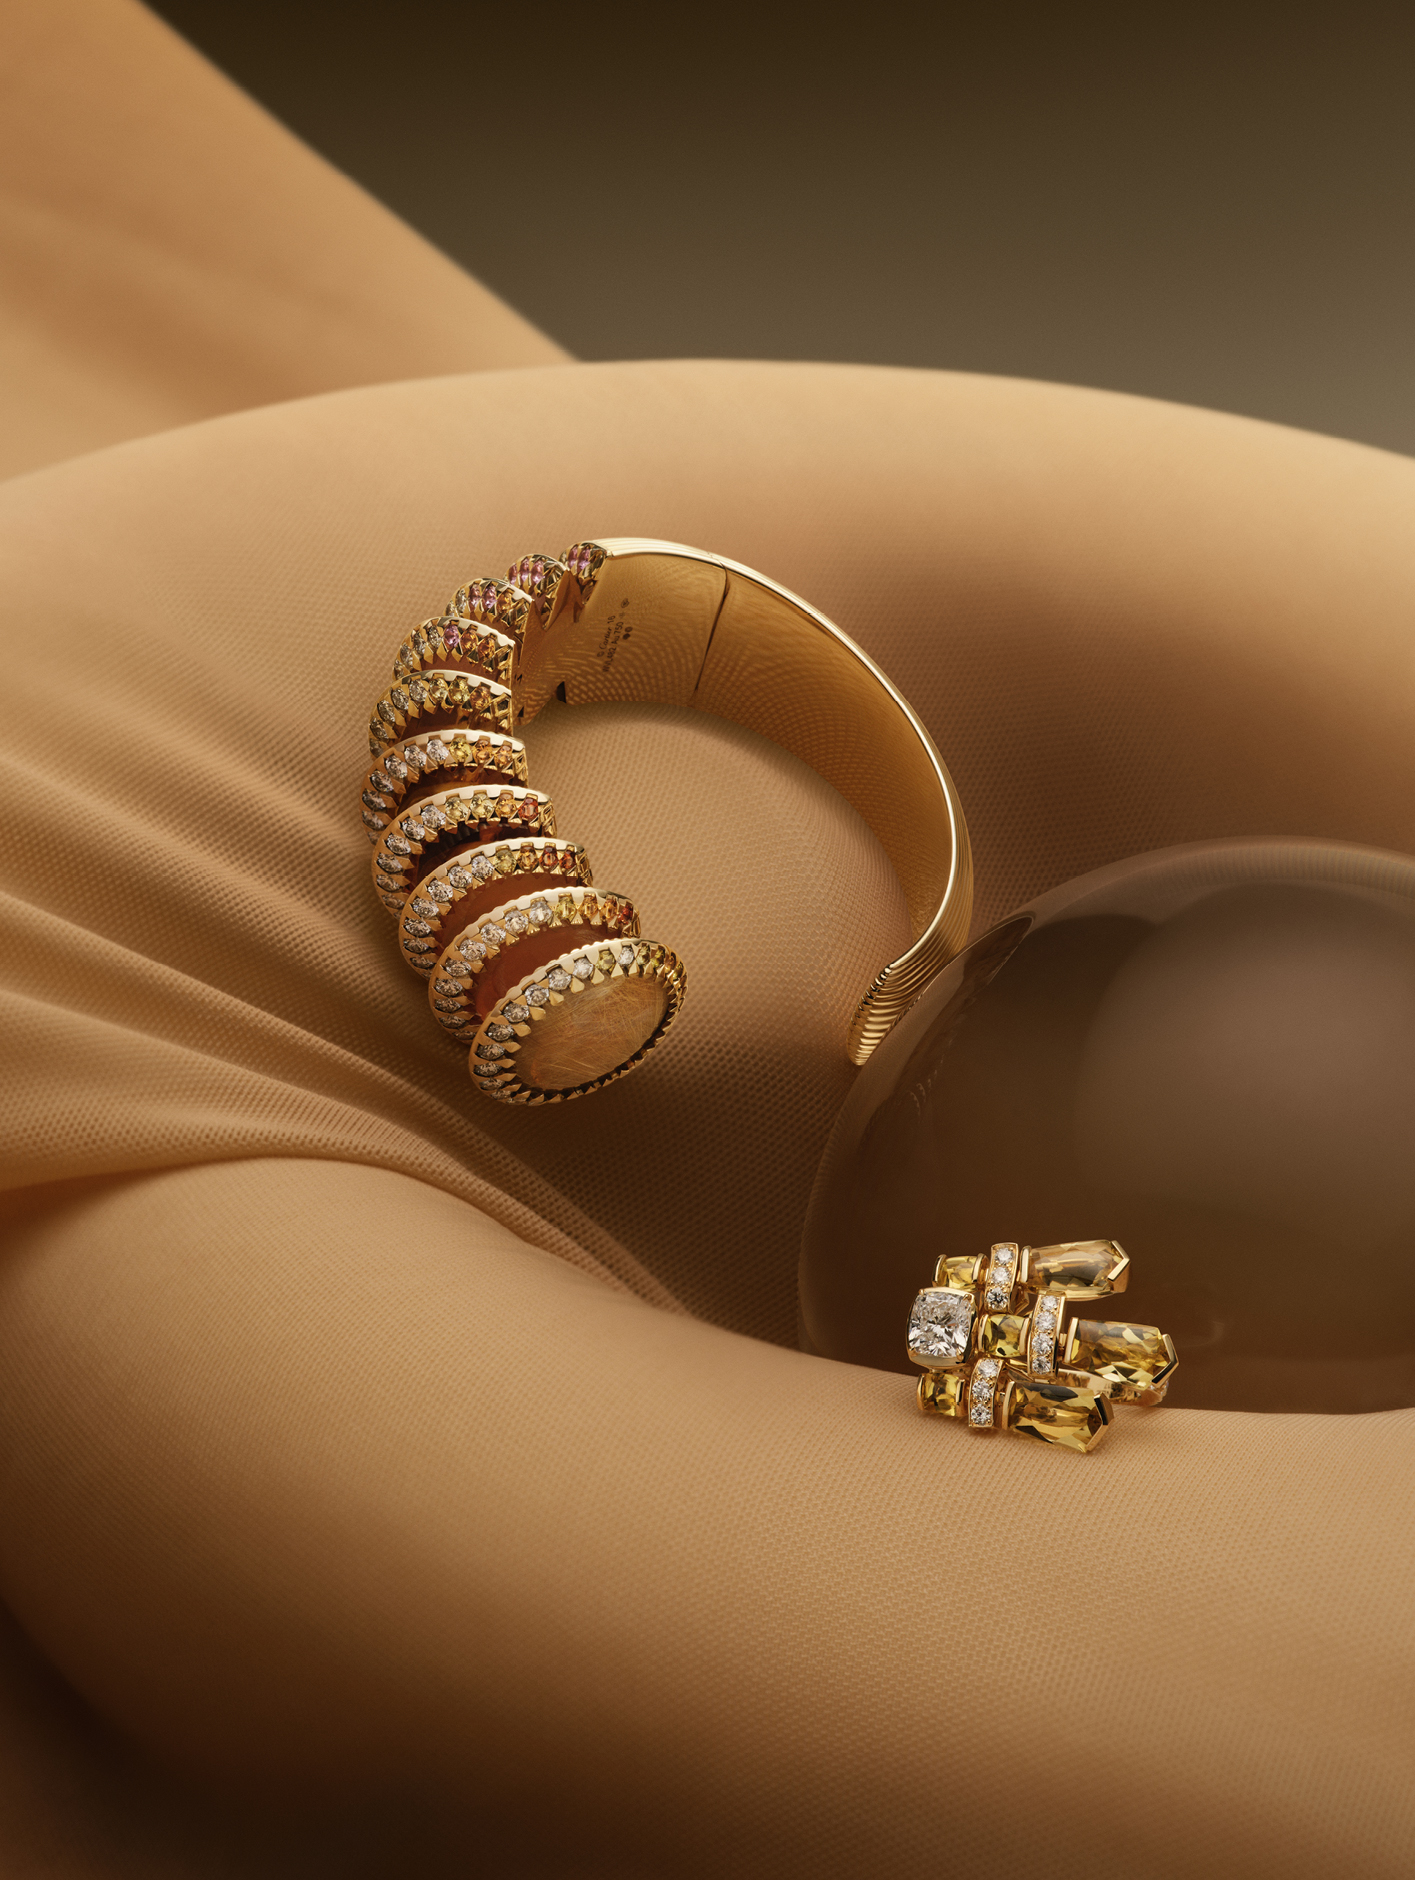 Libre Polymorph bracelet in 18k rose gold & Tweed de Chanel high-jewellery ring